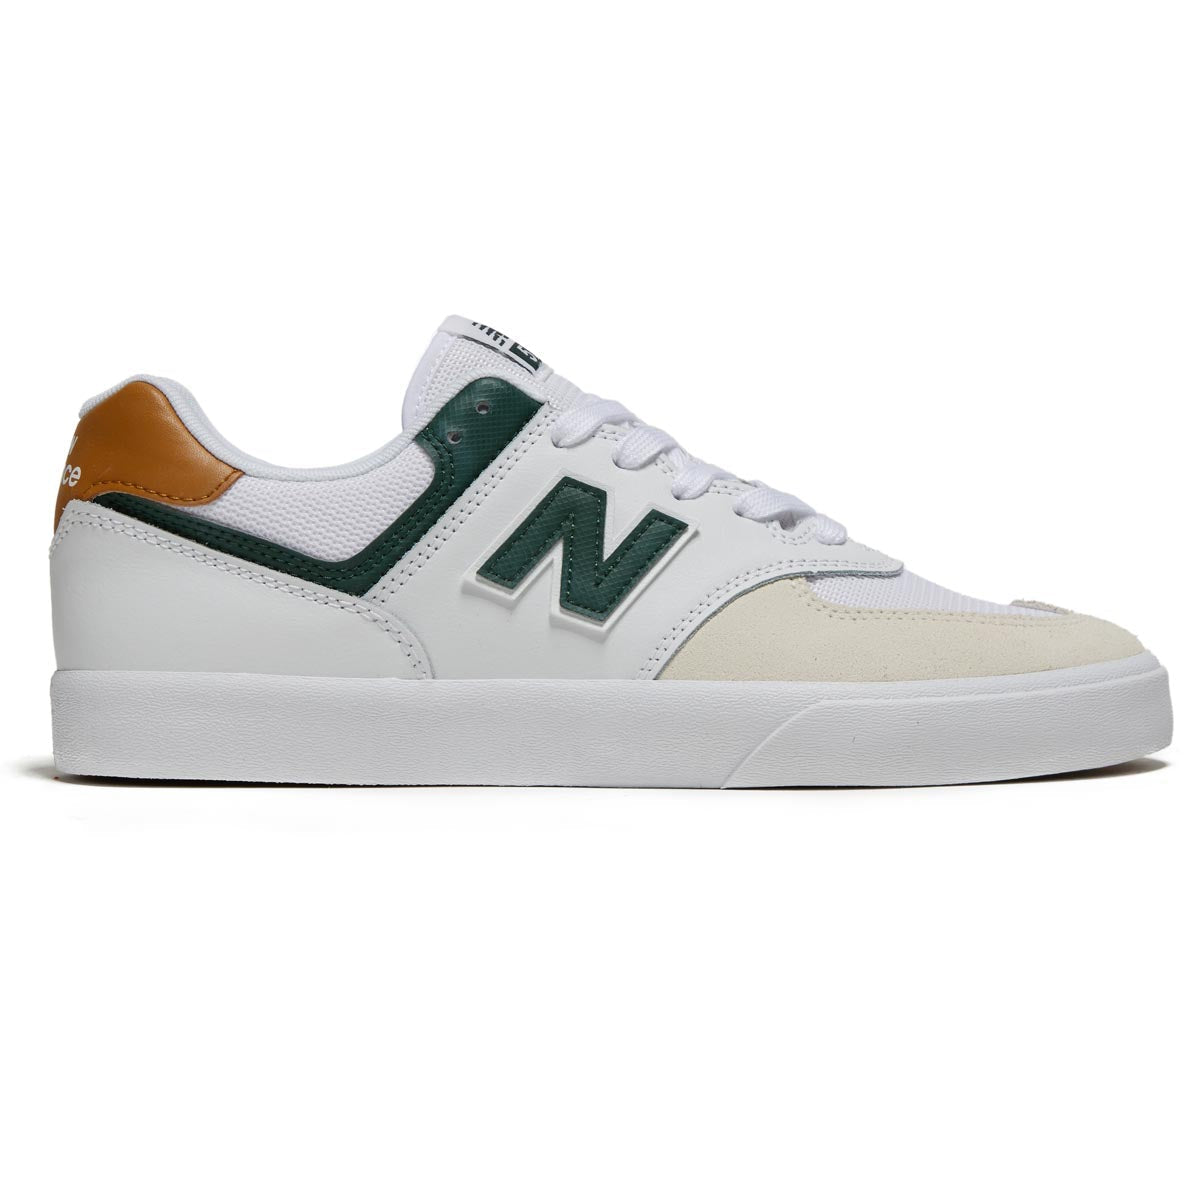 New Balance 574 Vulc Shoes - White image 1